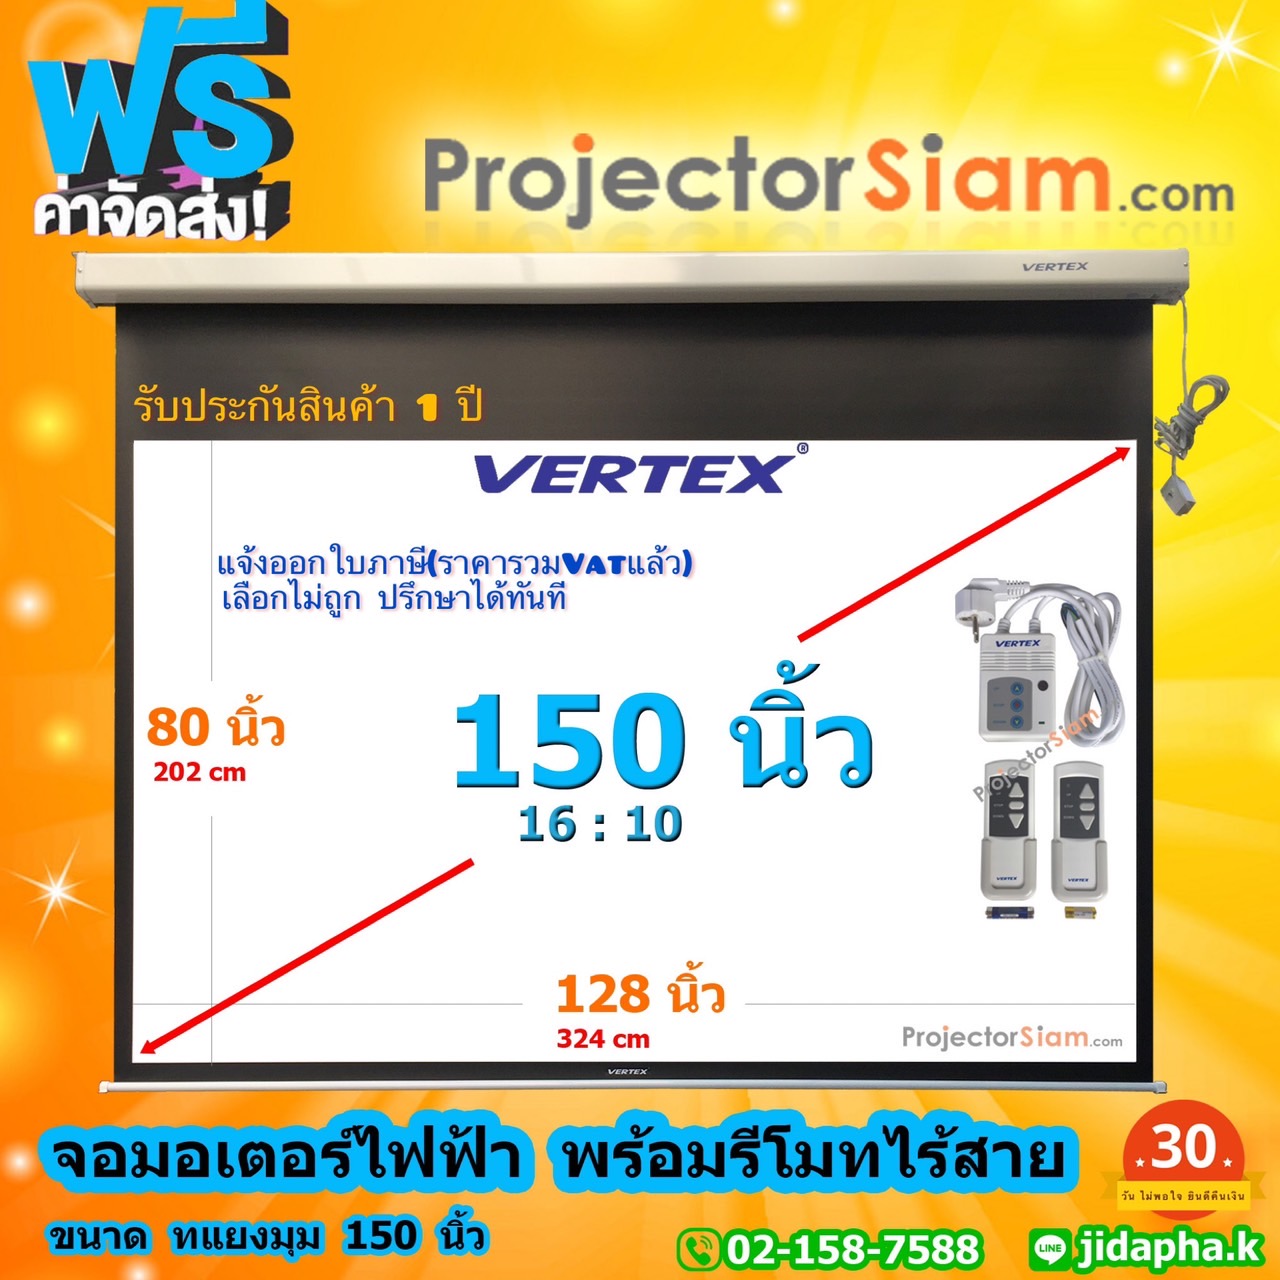 Vertex Motor 150 นิ้ว 16:10 จอโปรเจคเตอร์ screen projector จอมอเตอร์ไฟฟ้า (200 x 320 cm) (79 x 126 inch) พร้อมชุดรีโมทคอนโทรล